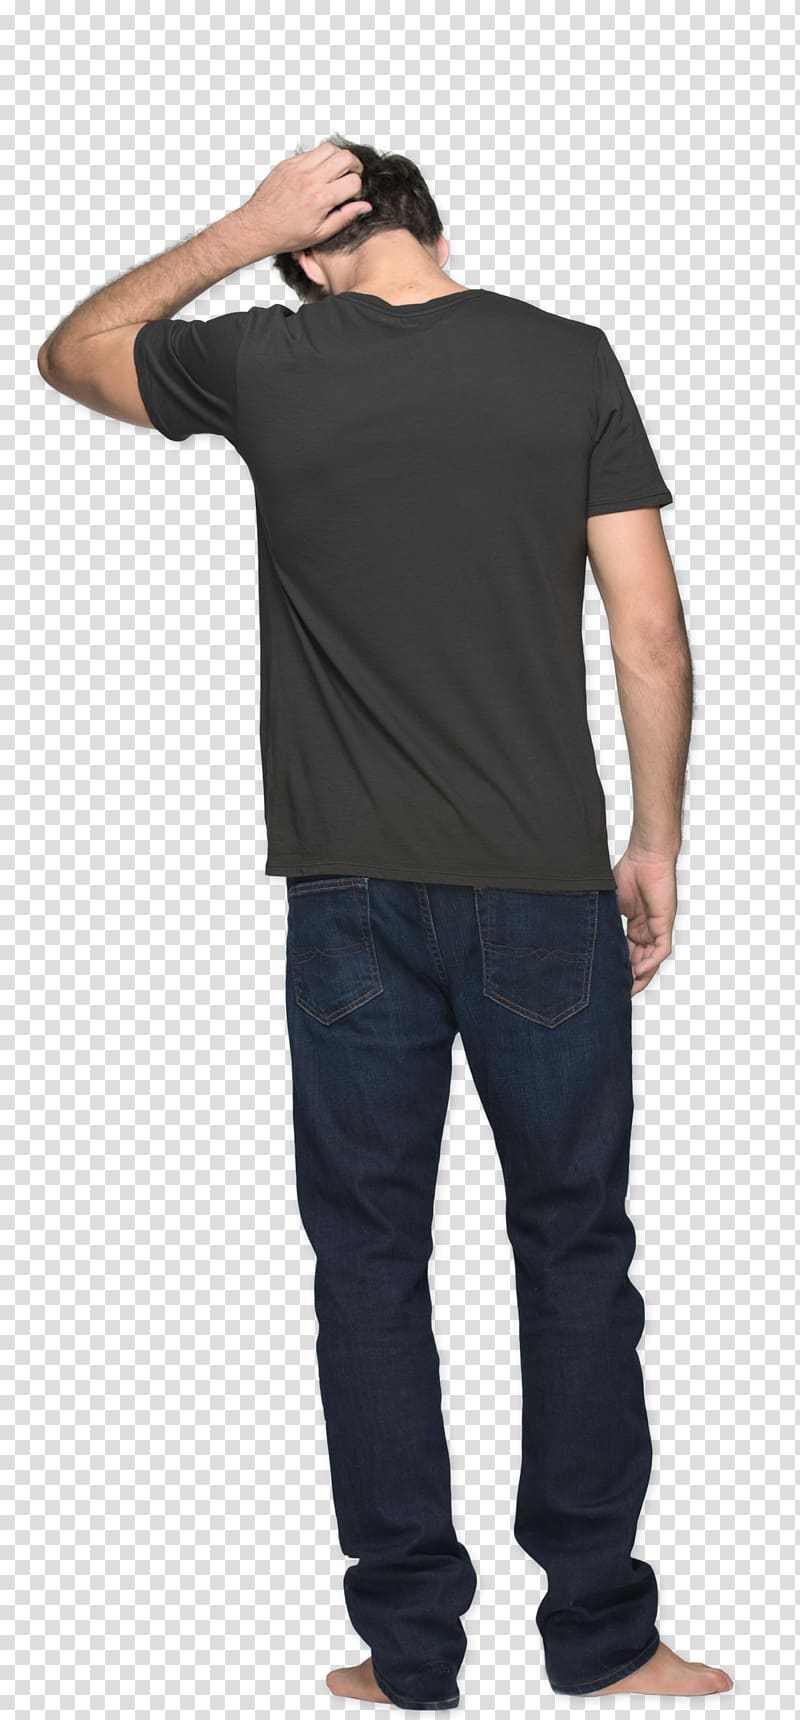 T-shirt Sleeve Overland Park Convention Center Top Human back, man back transparent background PNG clipart